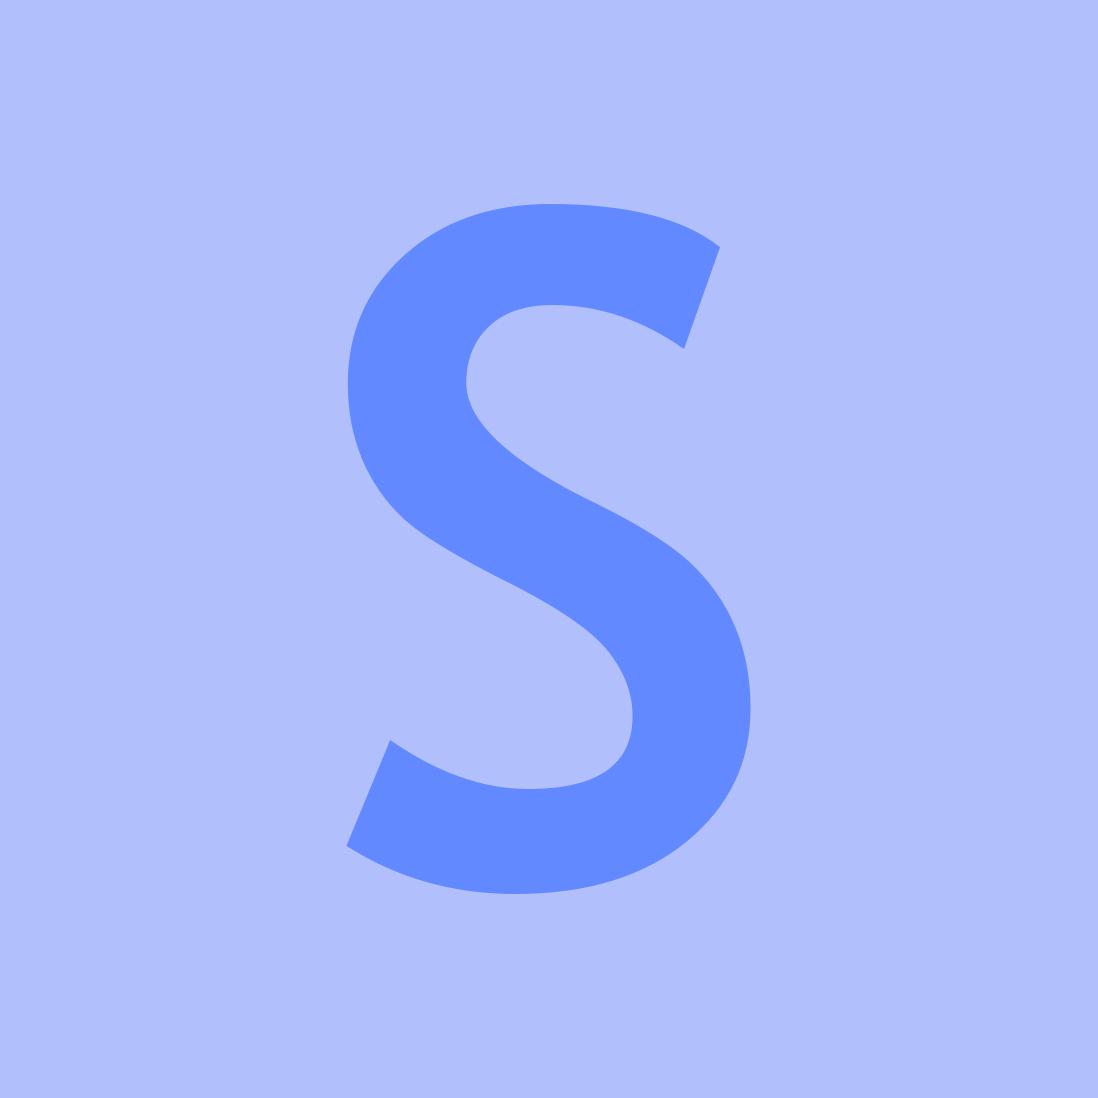 saosan6 profile image